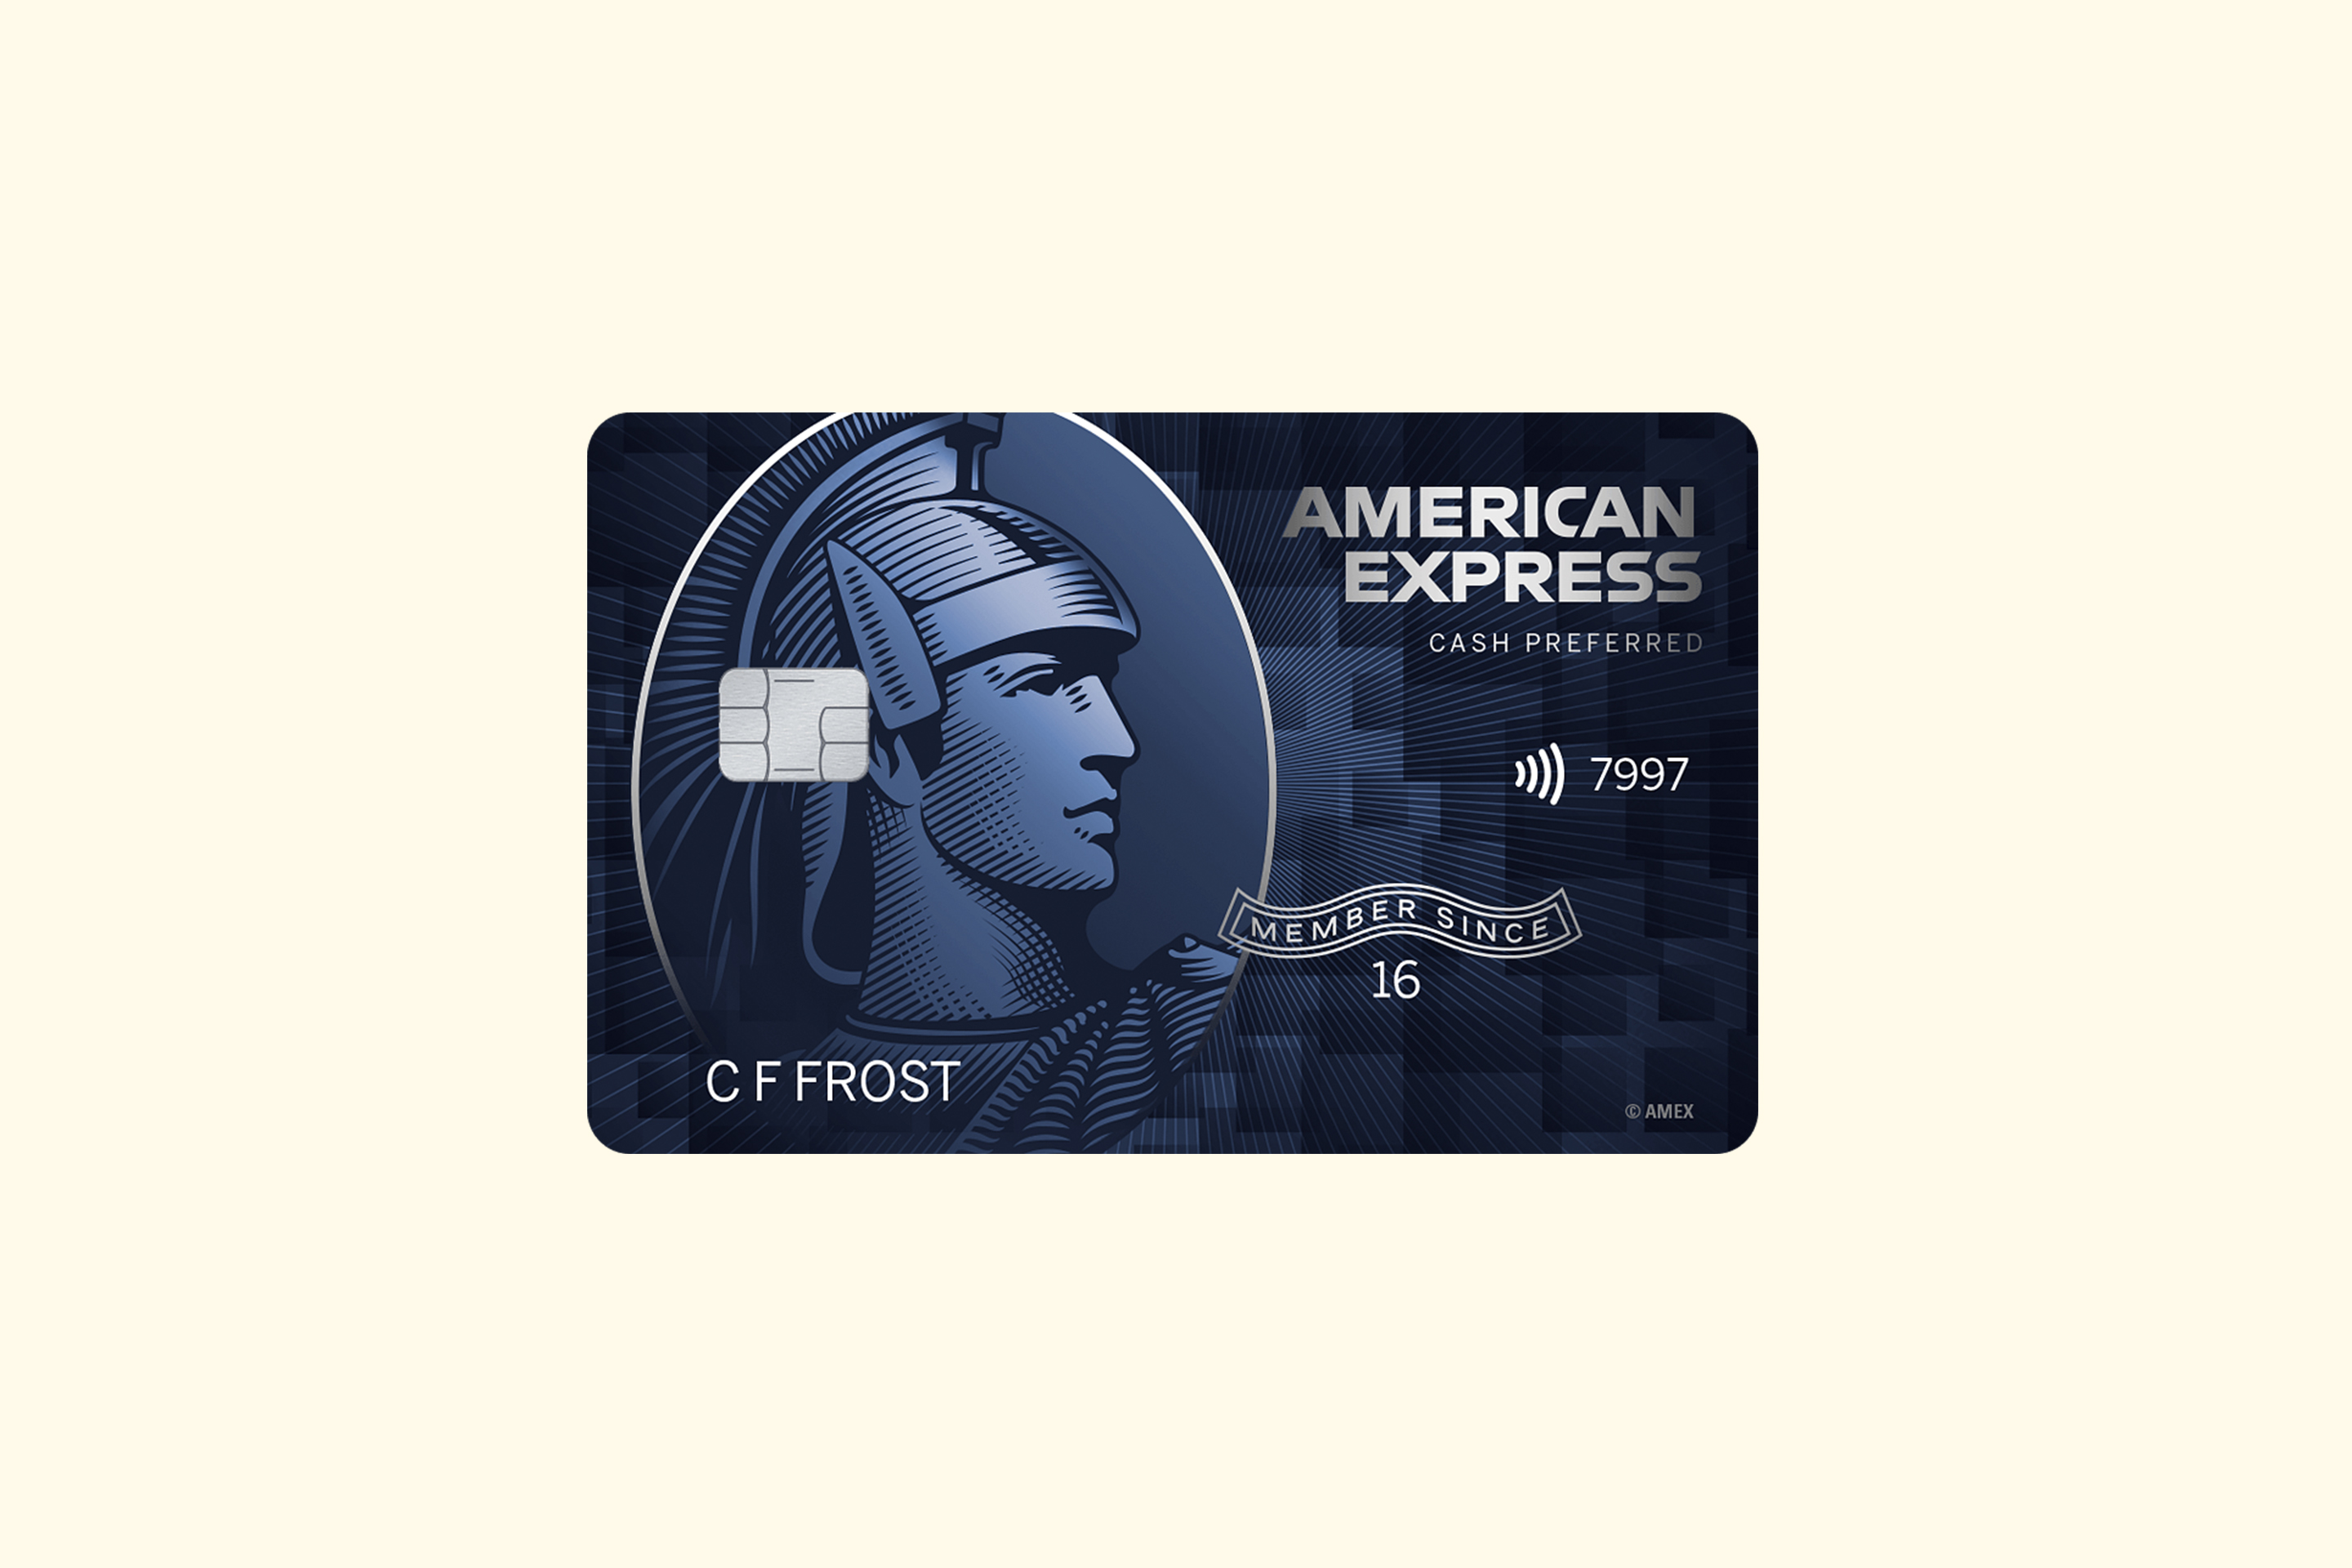 American Express Blue Cash Preferred Credit Card